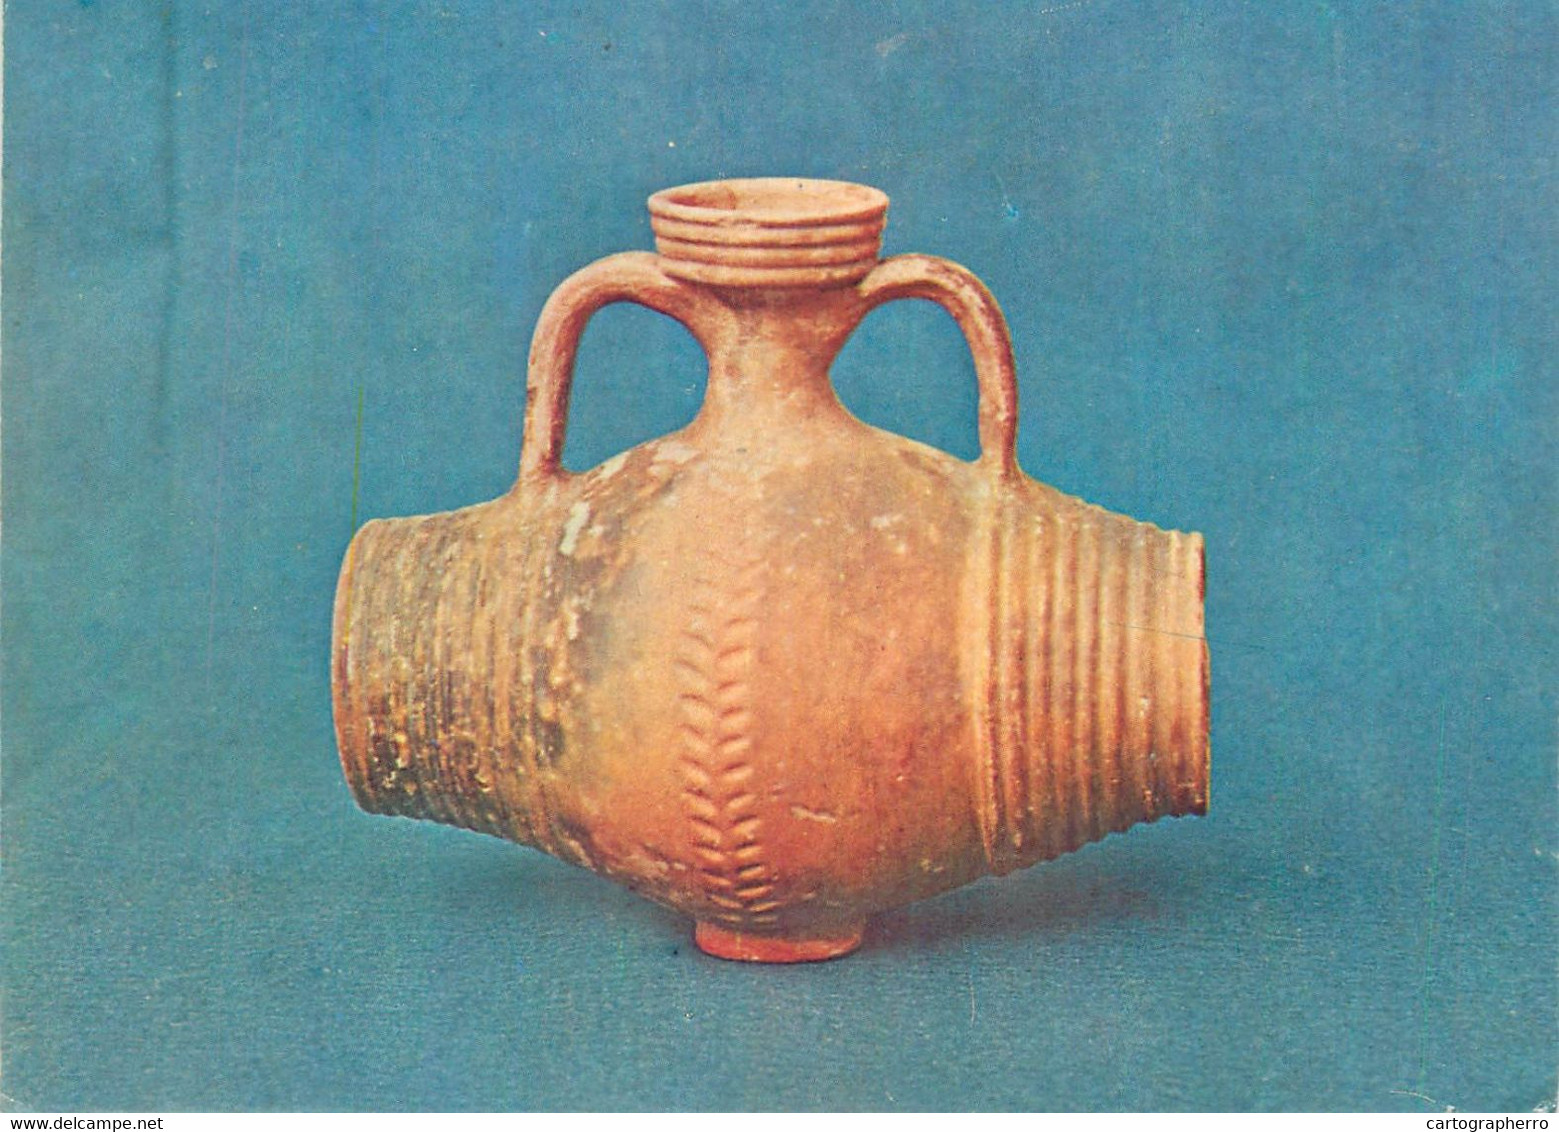 Fine Arts Postcard Barrel-shaped Clay Vessel From Roman Period History Museum Of Transylvania - Sculptures